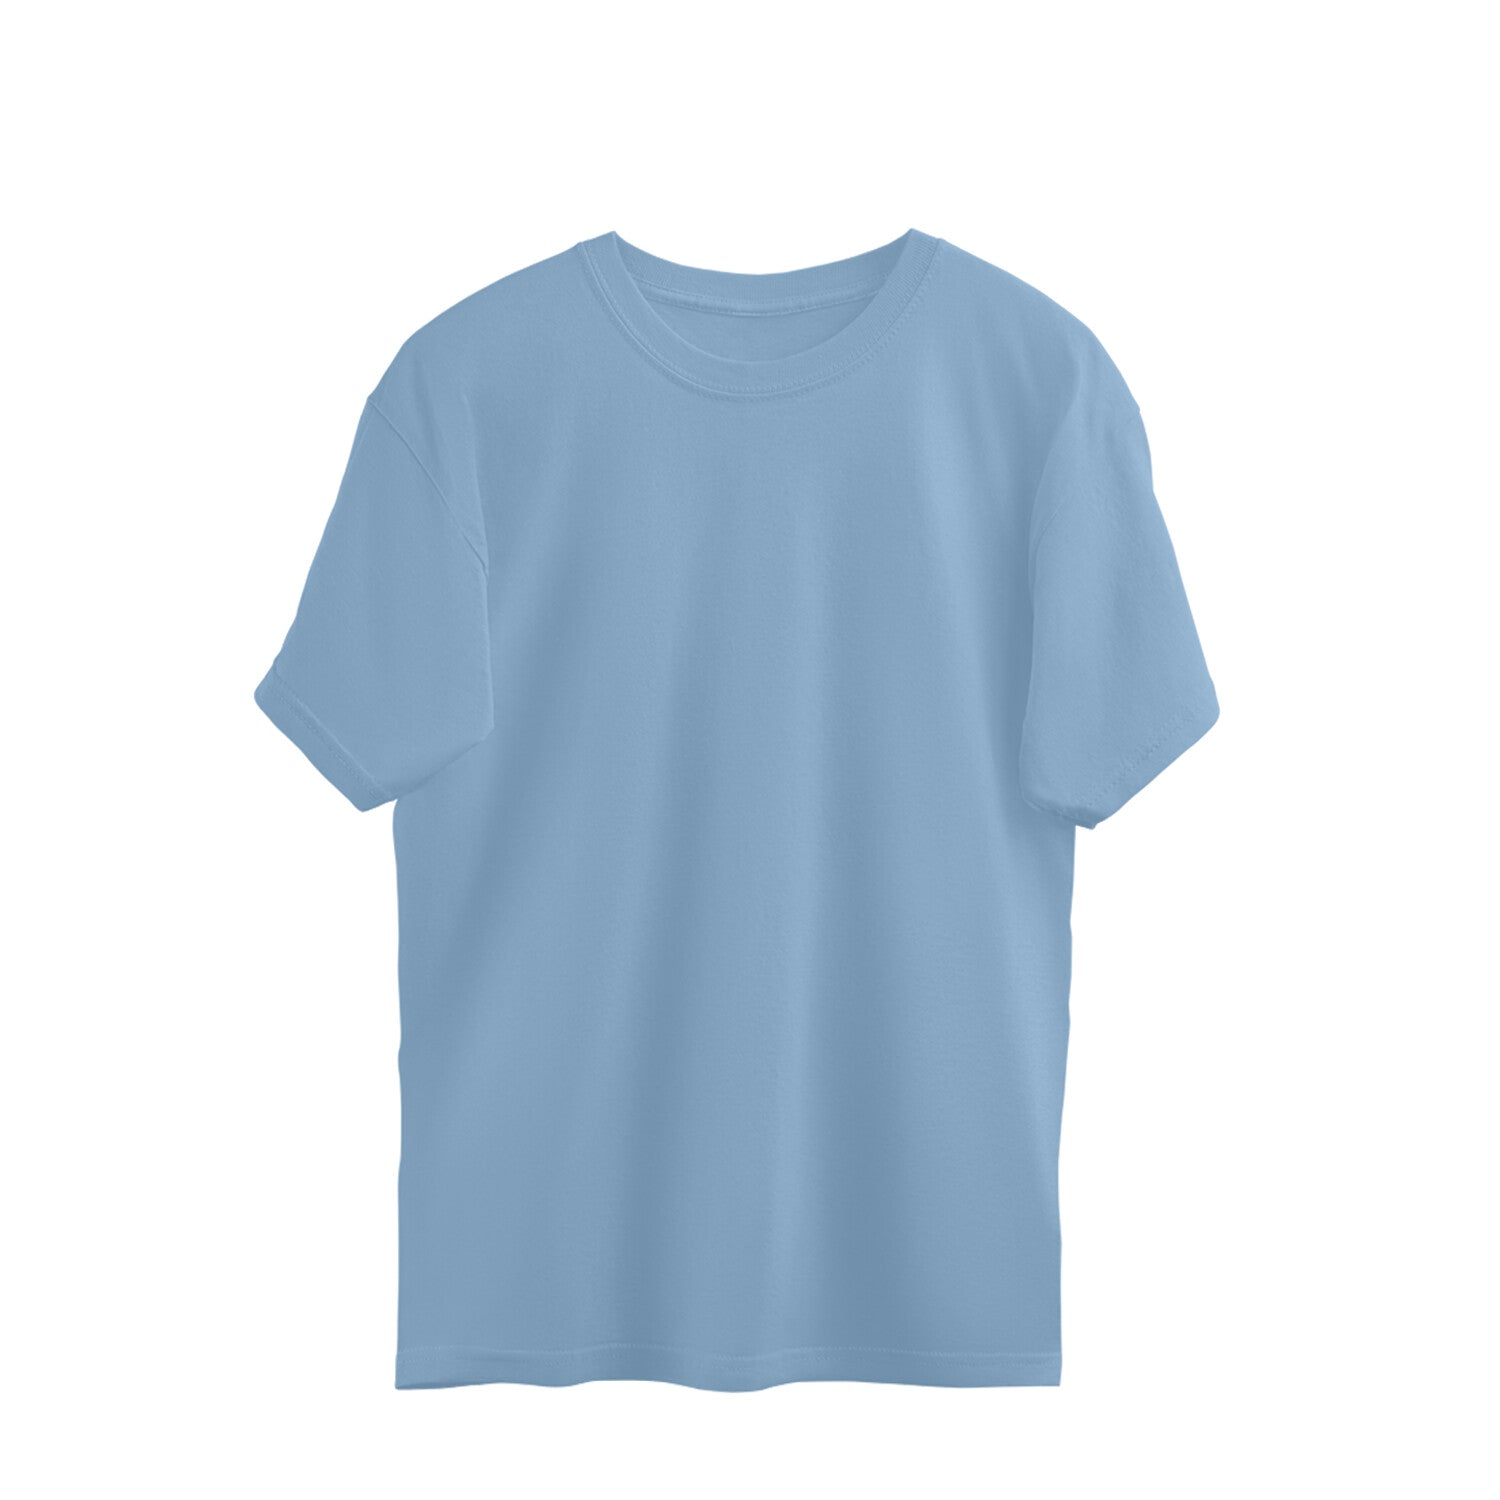 Men's Blue Over-Sized T-shirt